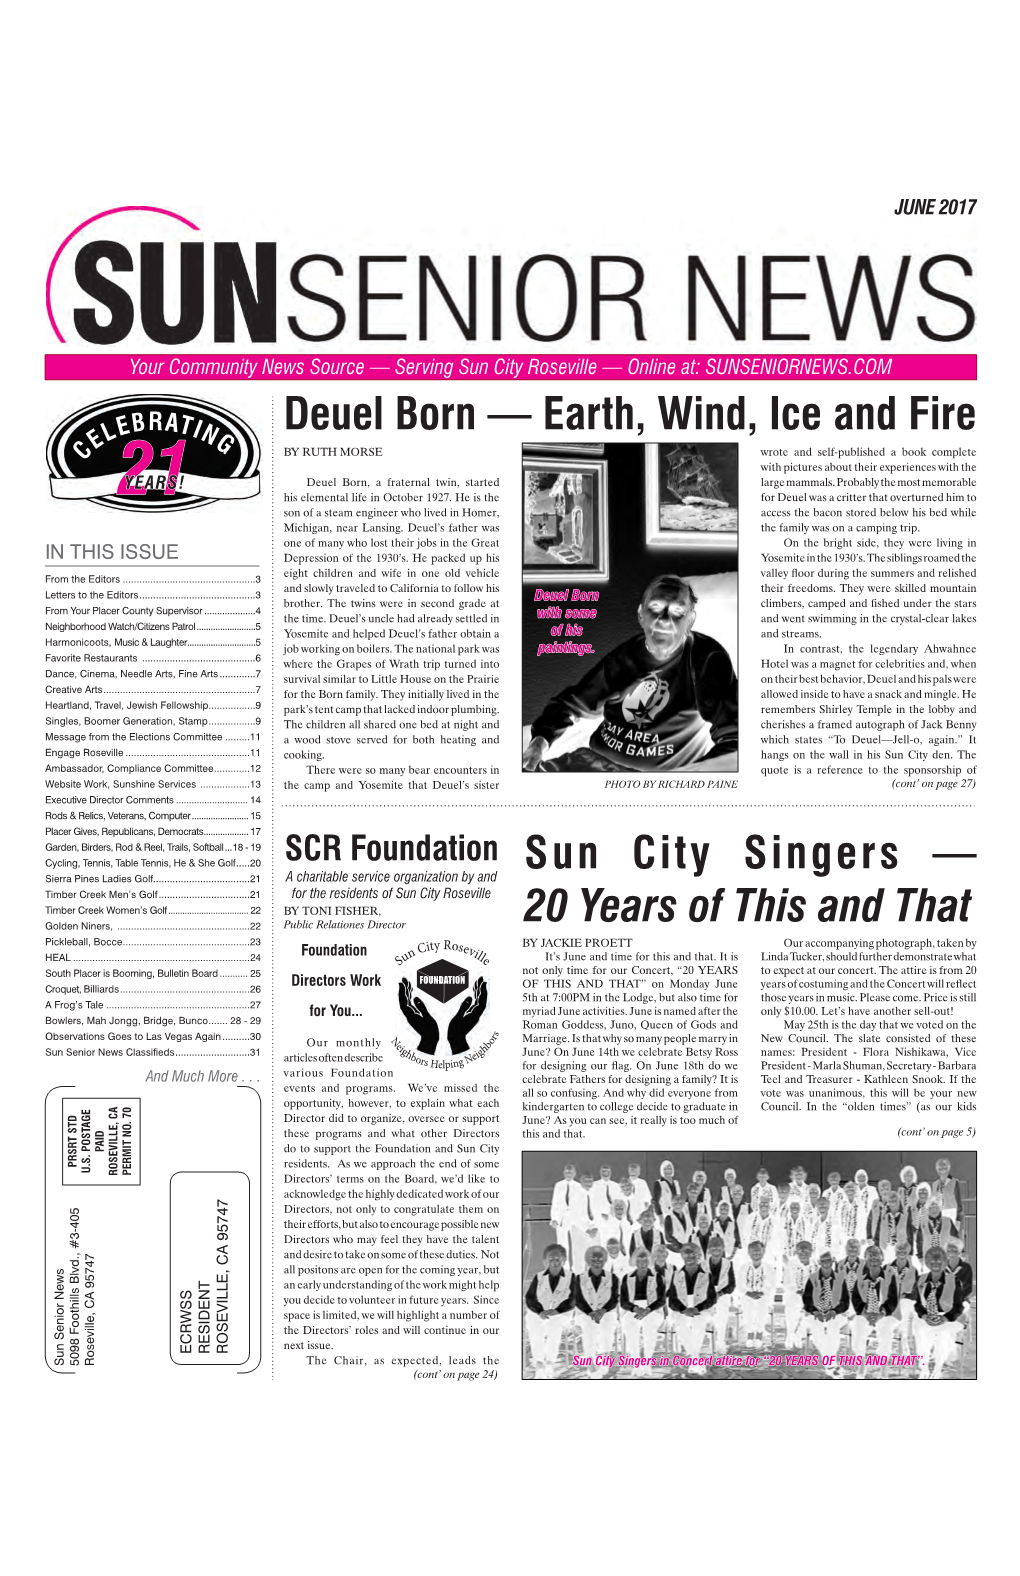 Serving Sun City Roseville — Online At: SUNSENIORNEWS.COM